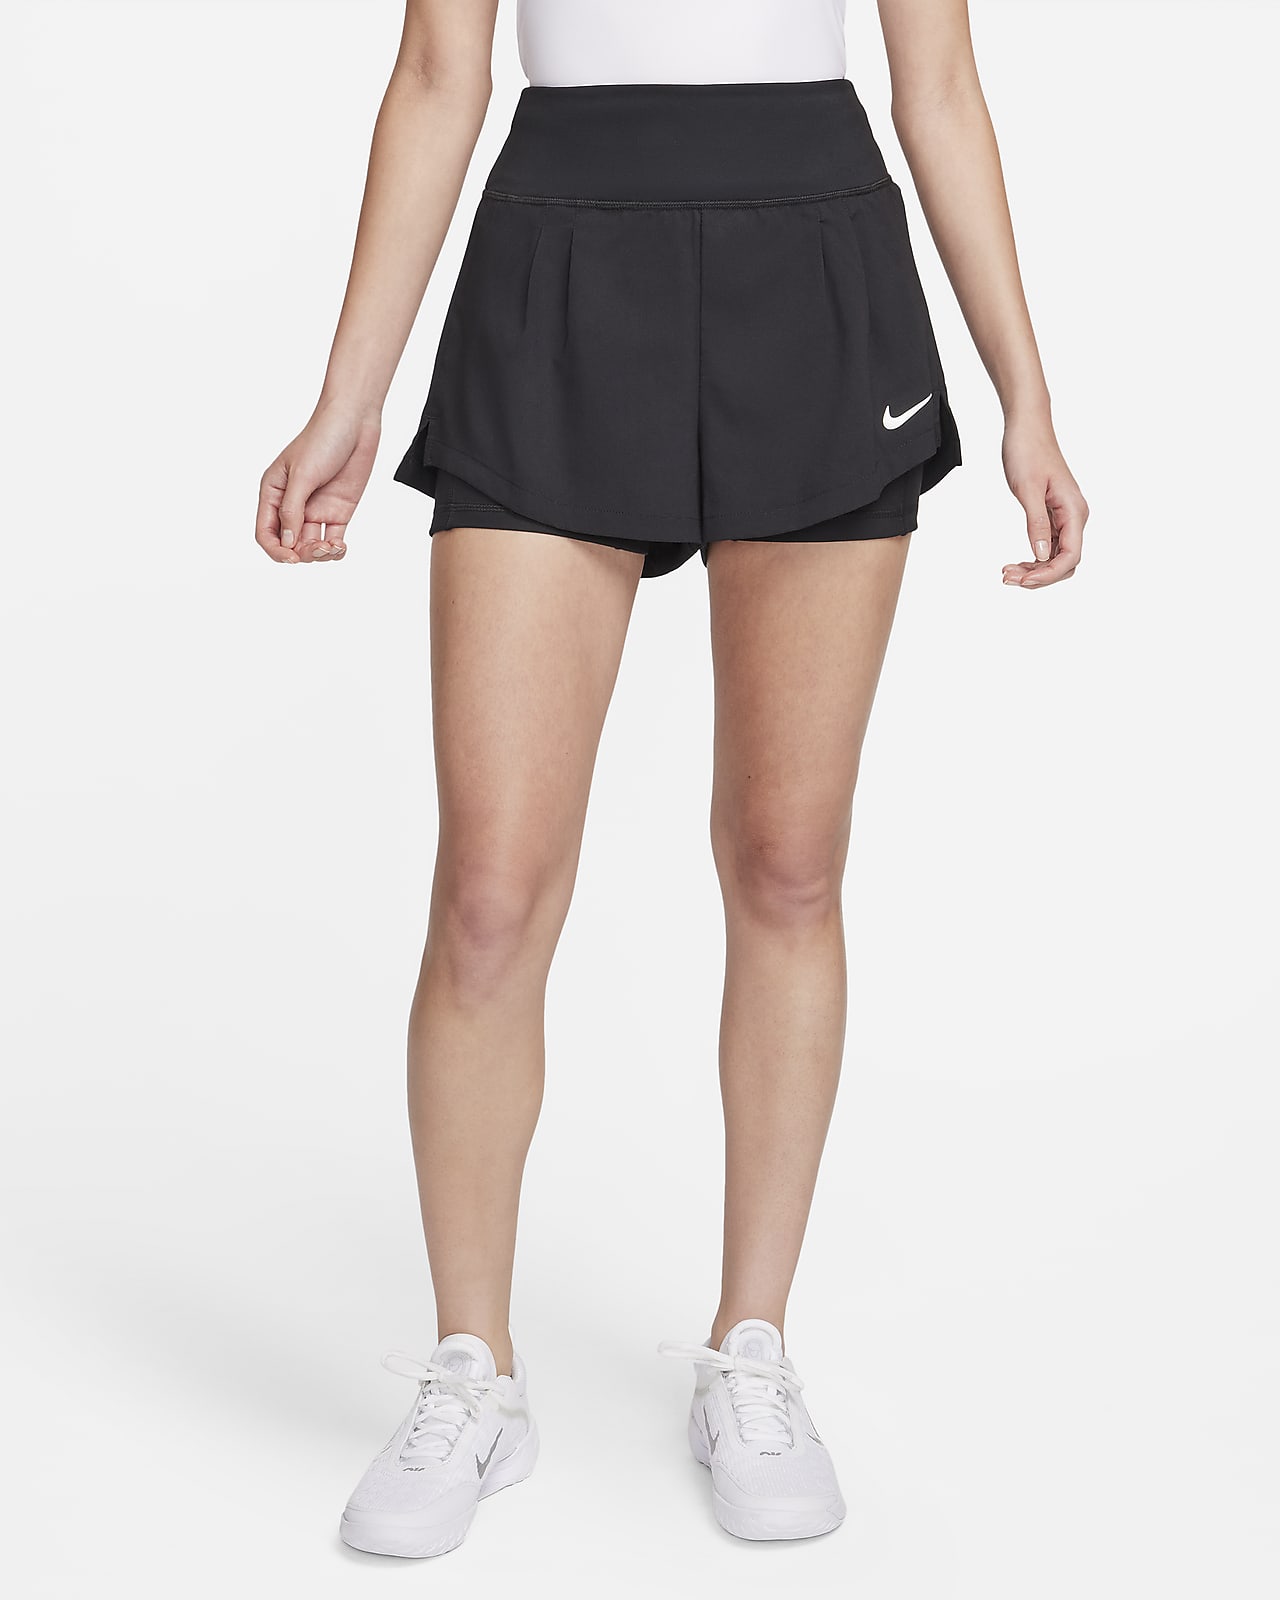 NikeCourt Advantage Women's Shorts